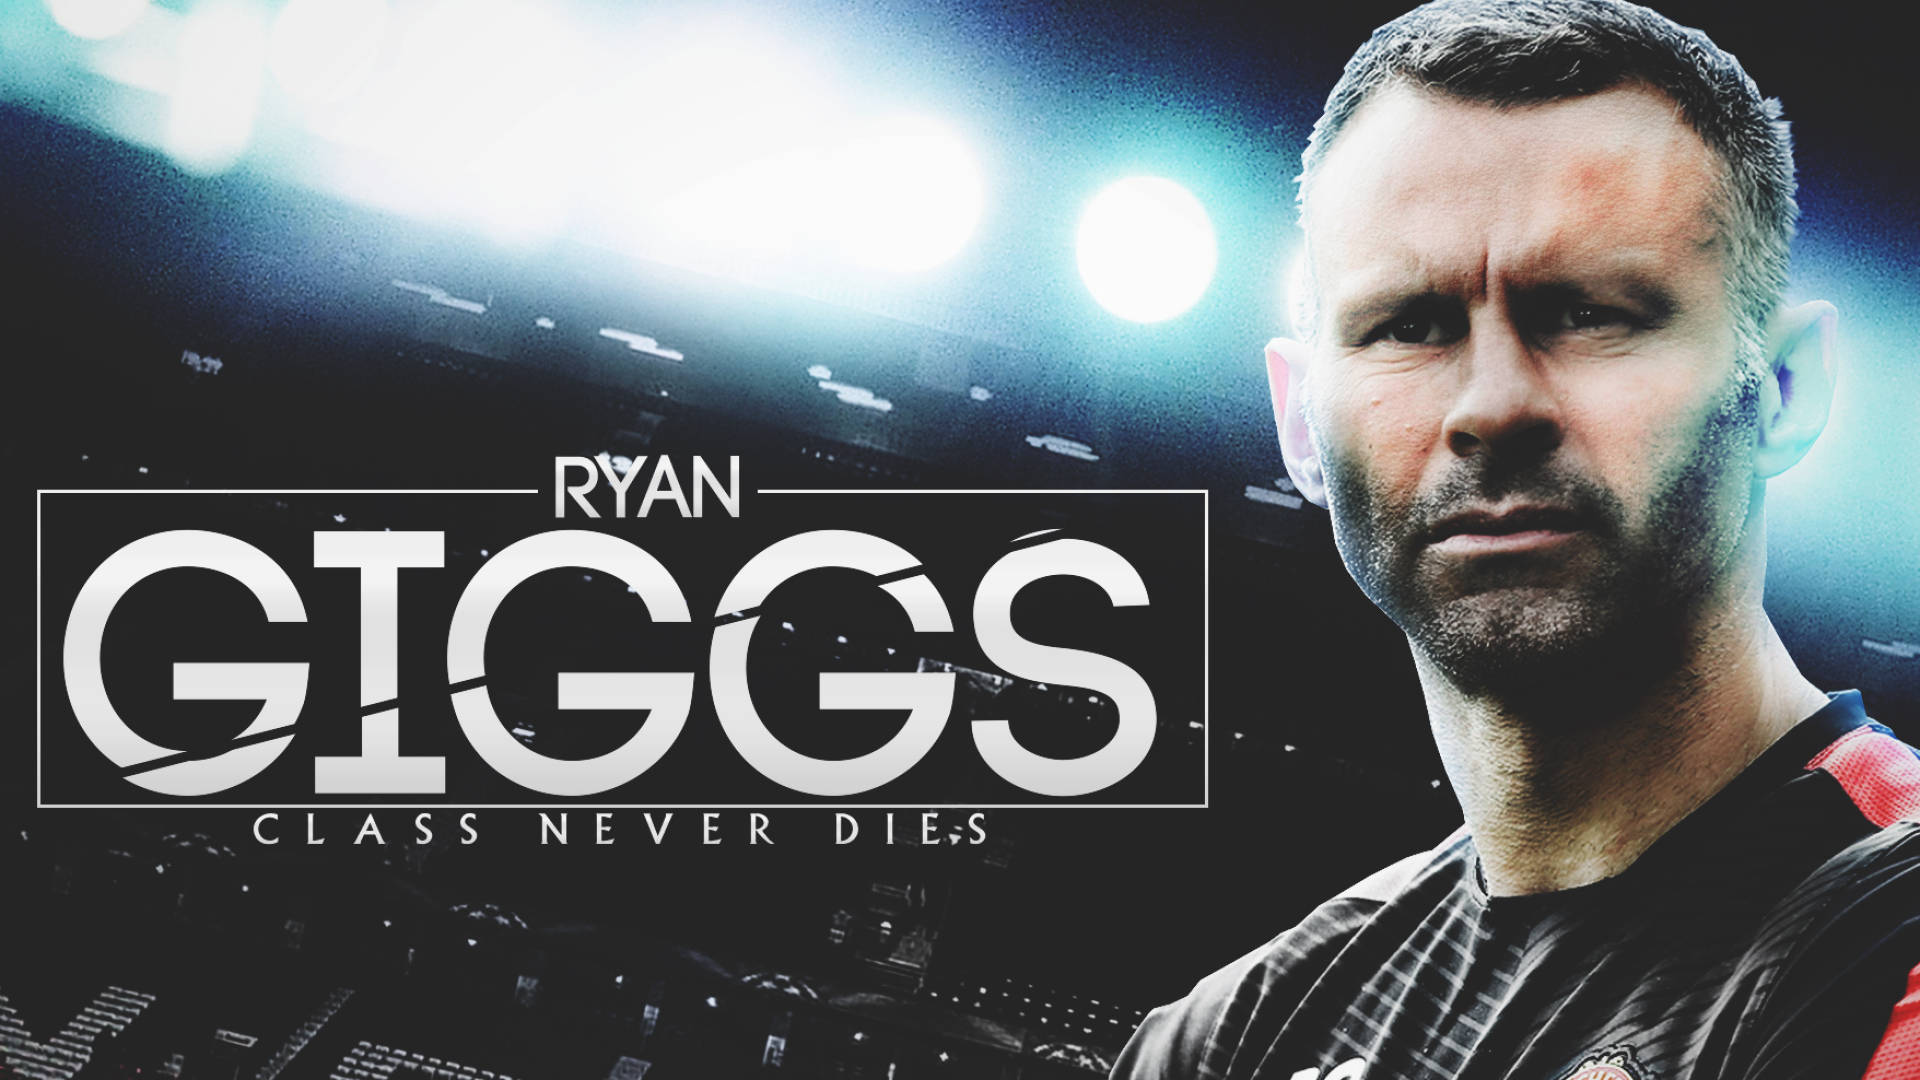 Ryan Giggs Class Never Dies